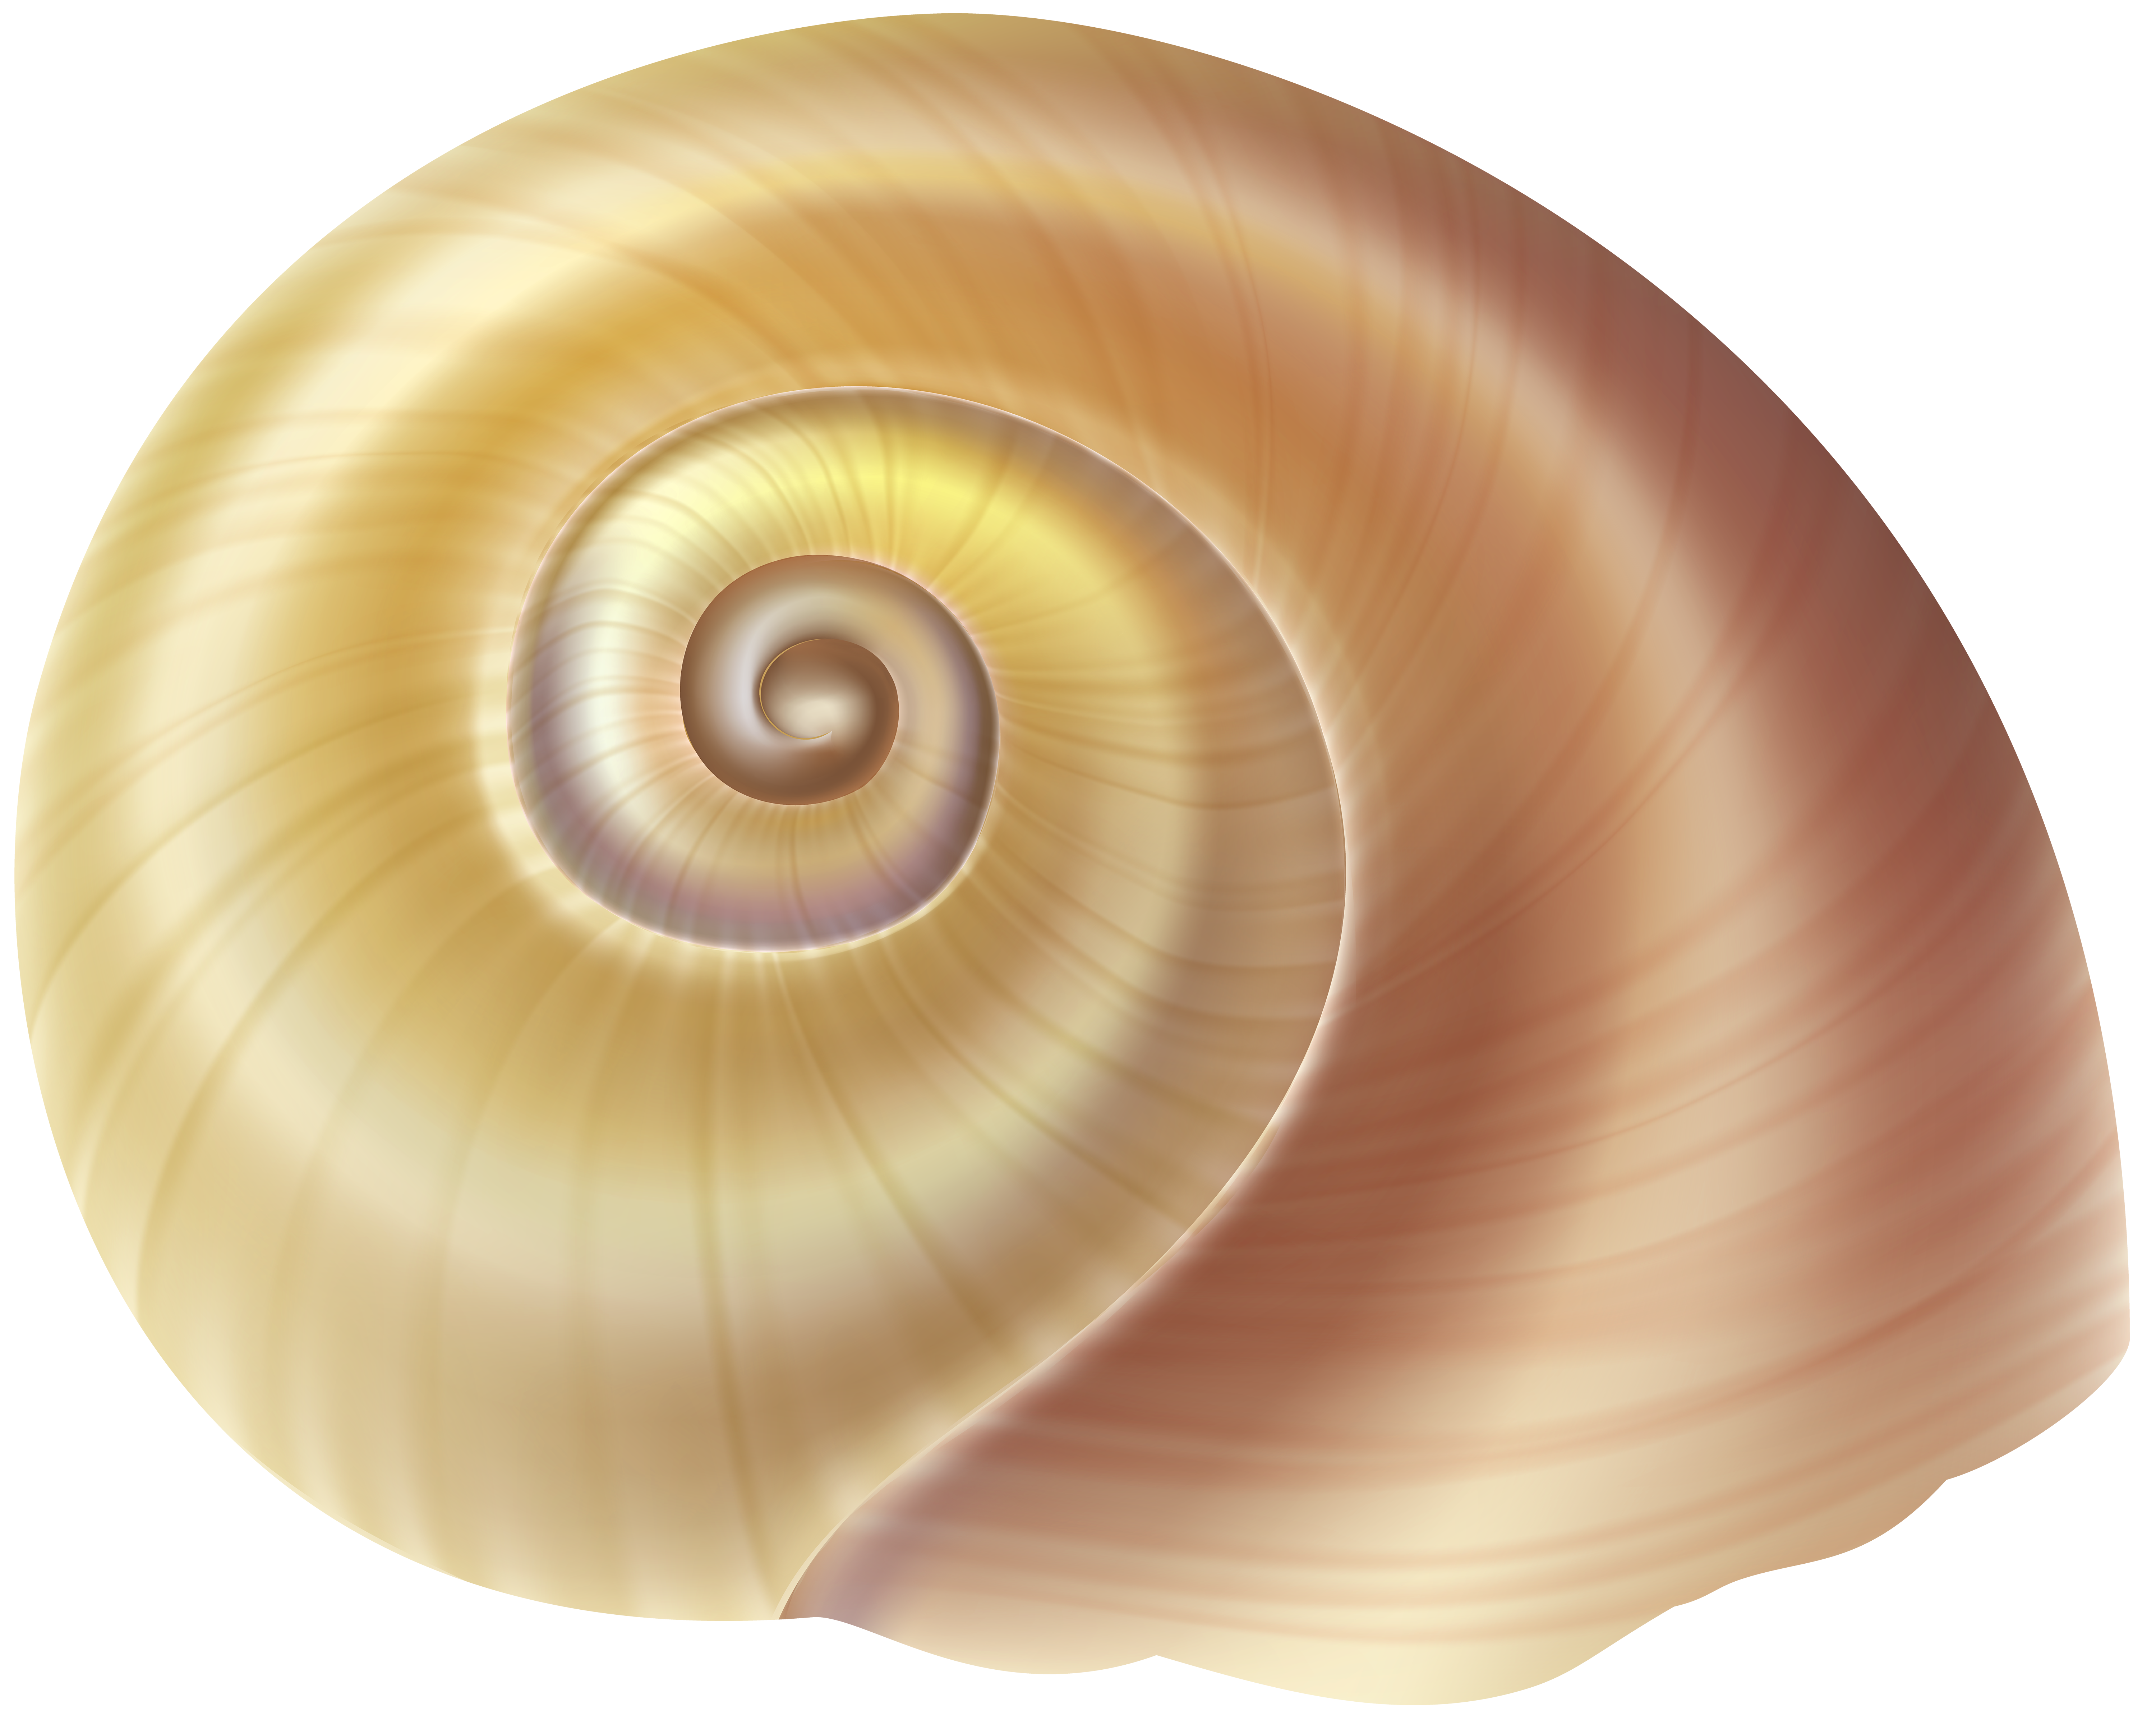 Sea Snail Shell PNG Clip Art Image